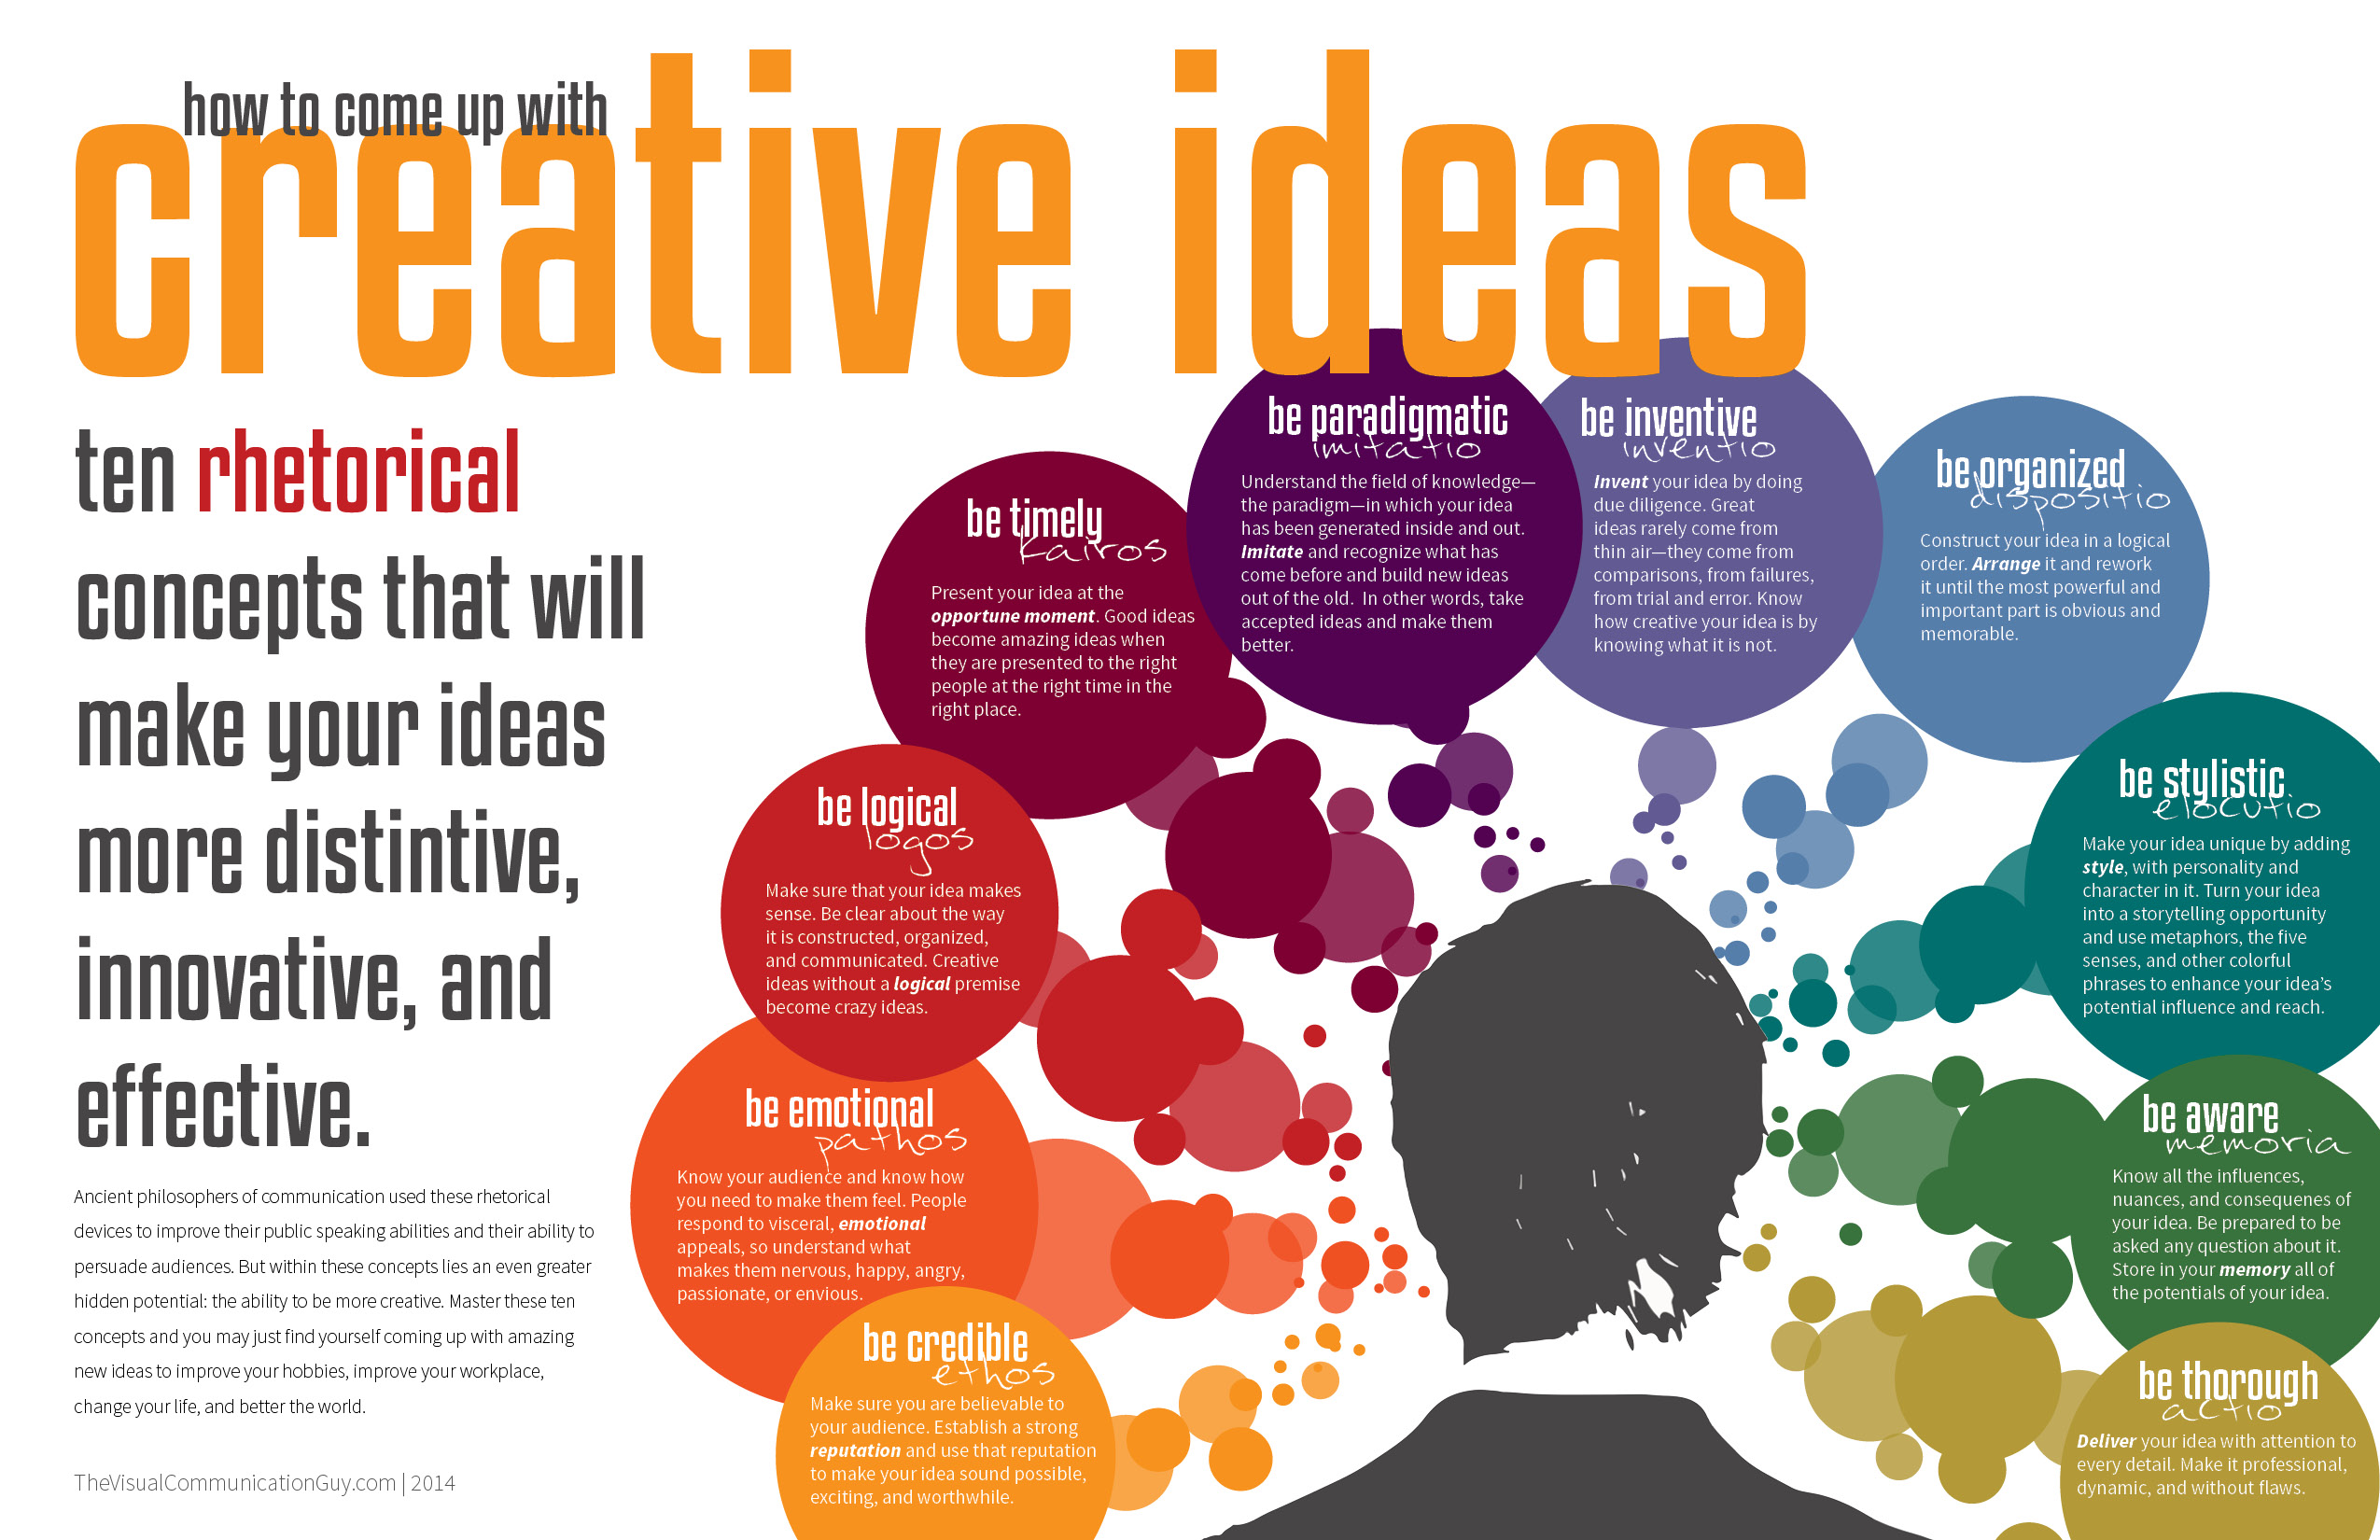 Design concept for Idea. Infographic idea of making creative